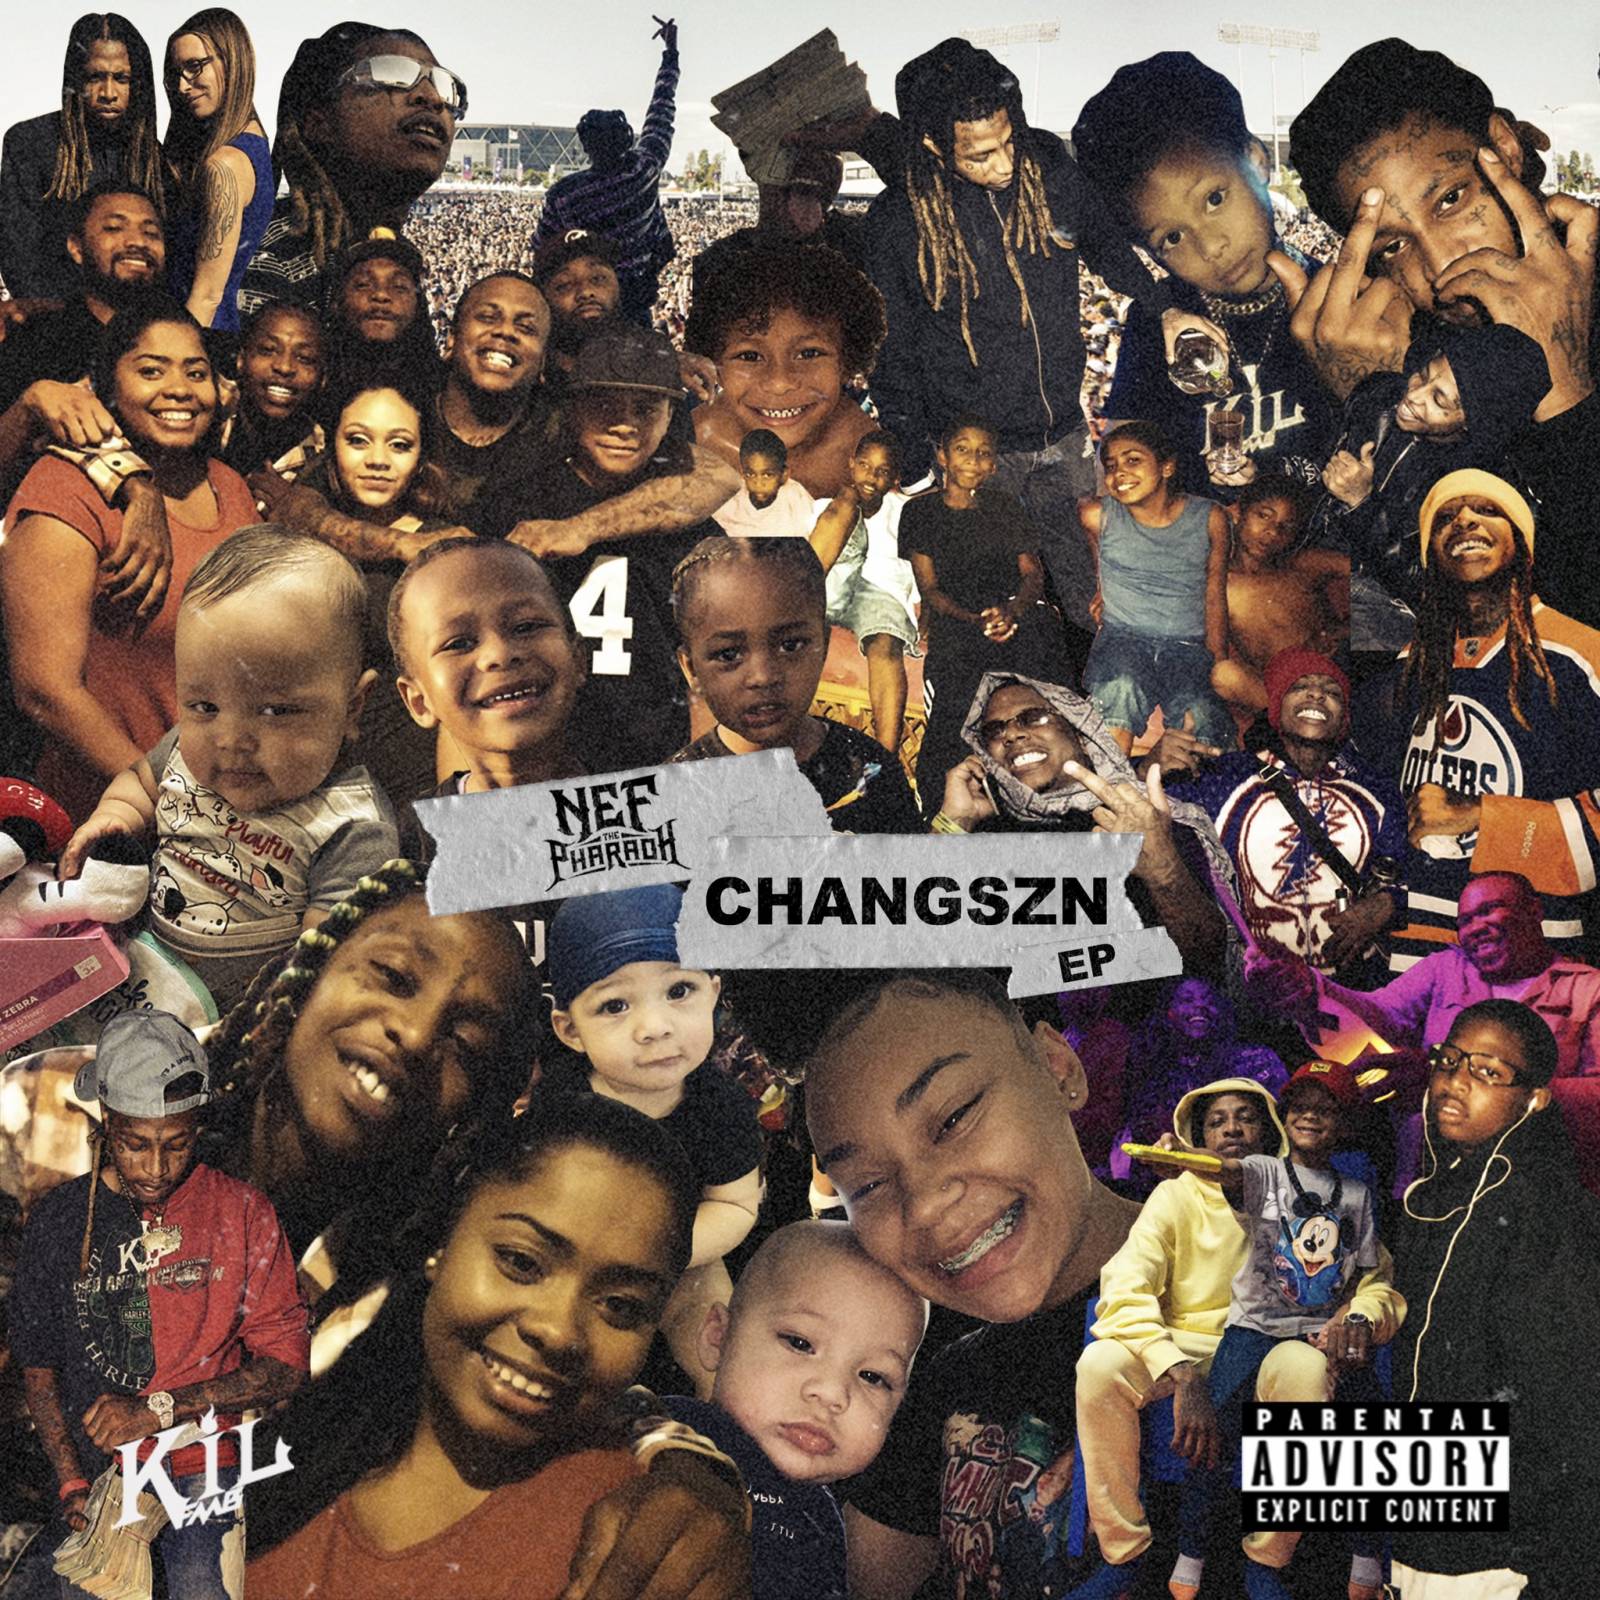 Nef The Pharaoh Releases 'CHANGSZN' EP